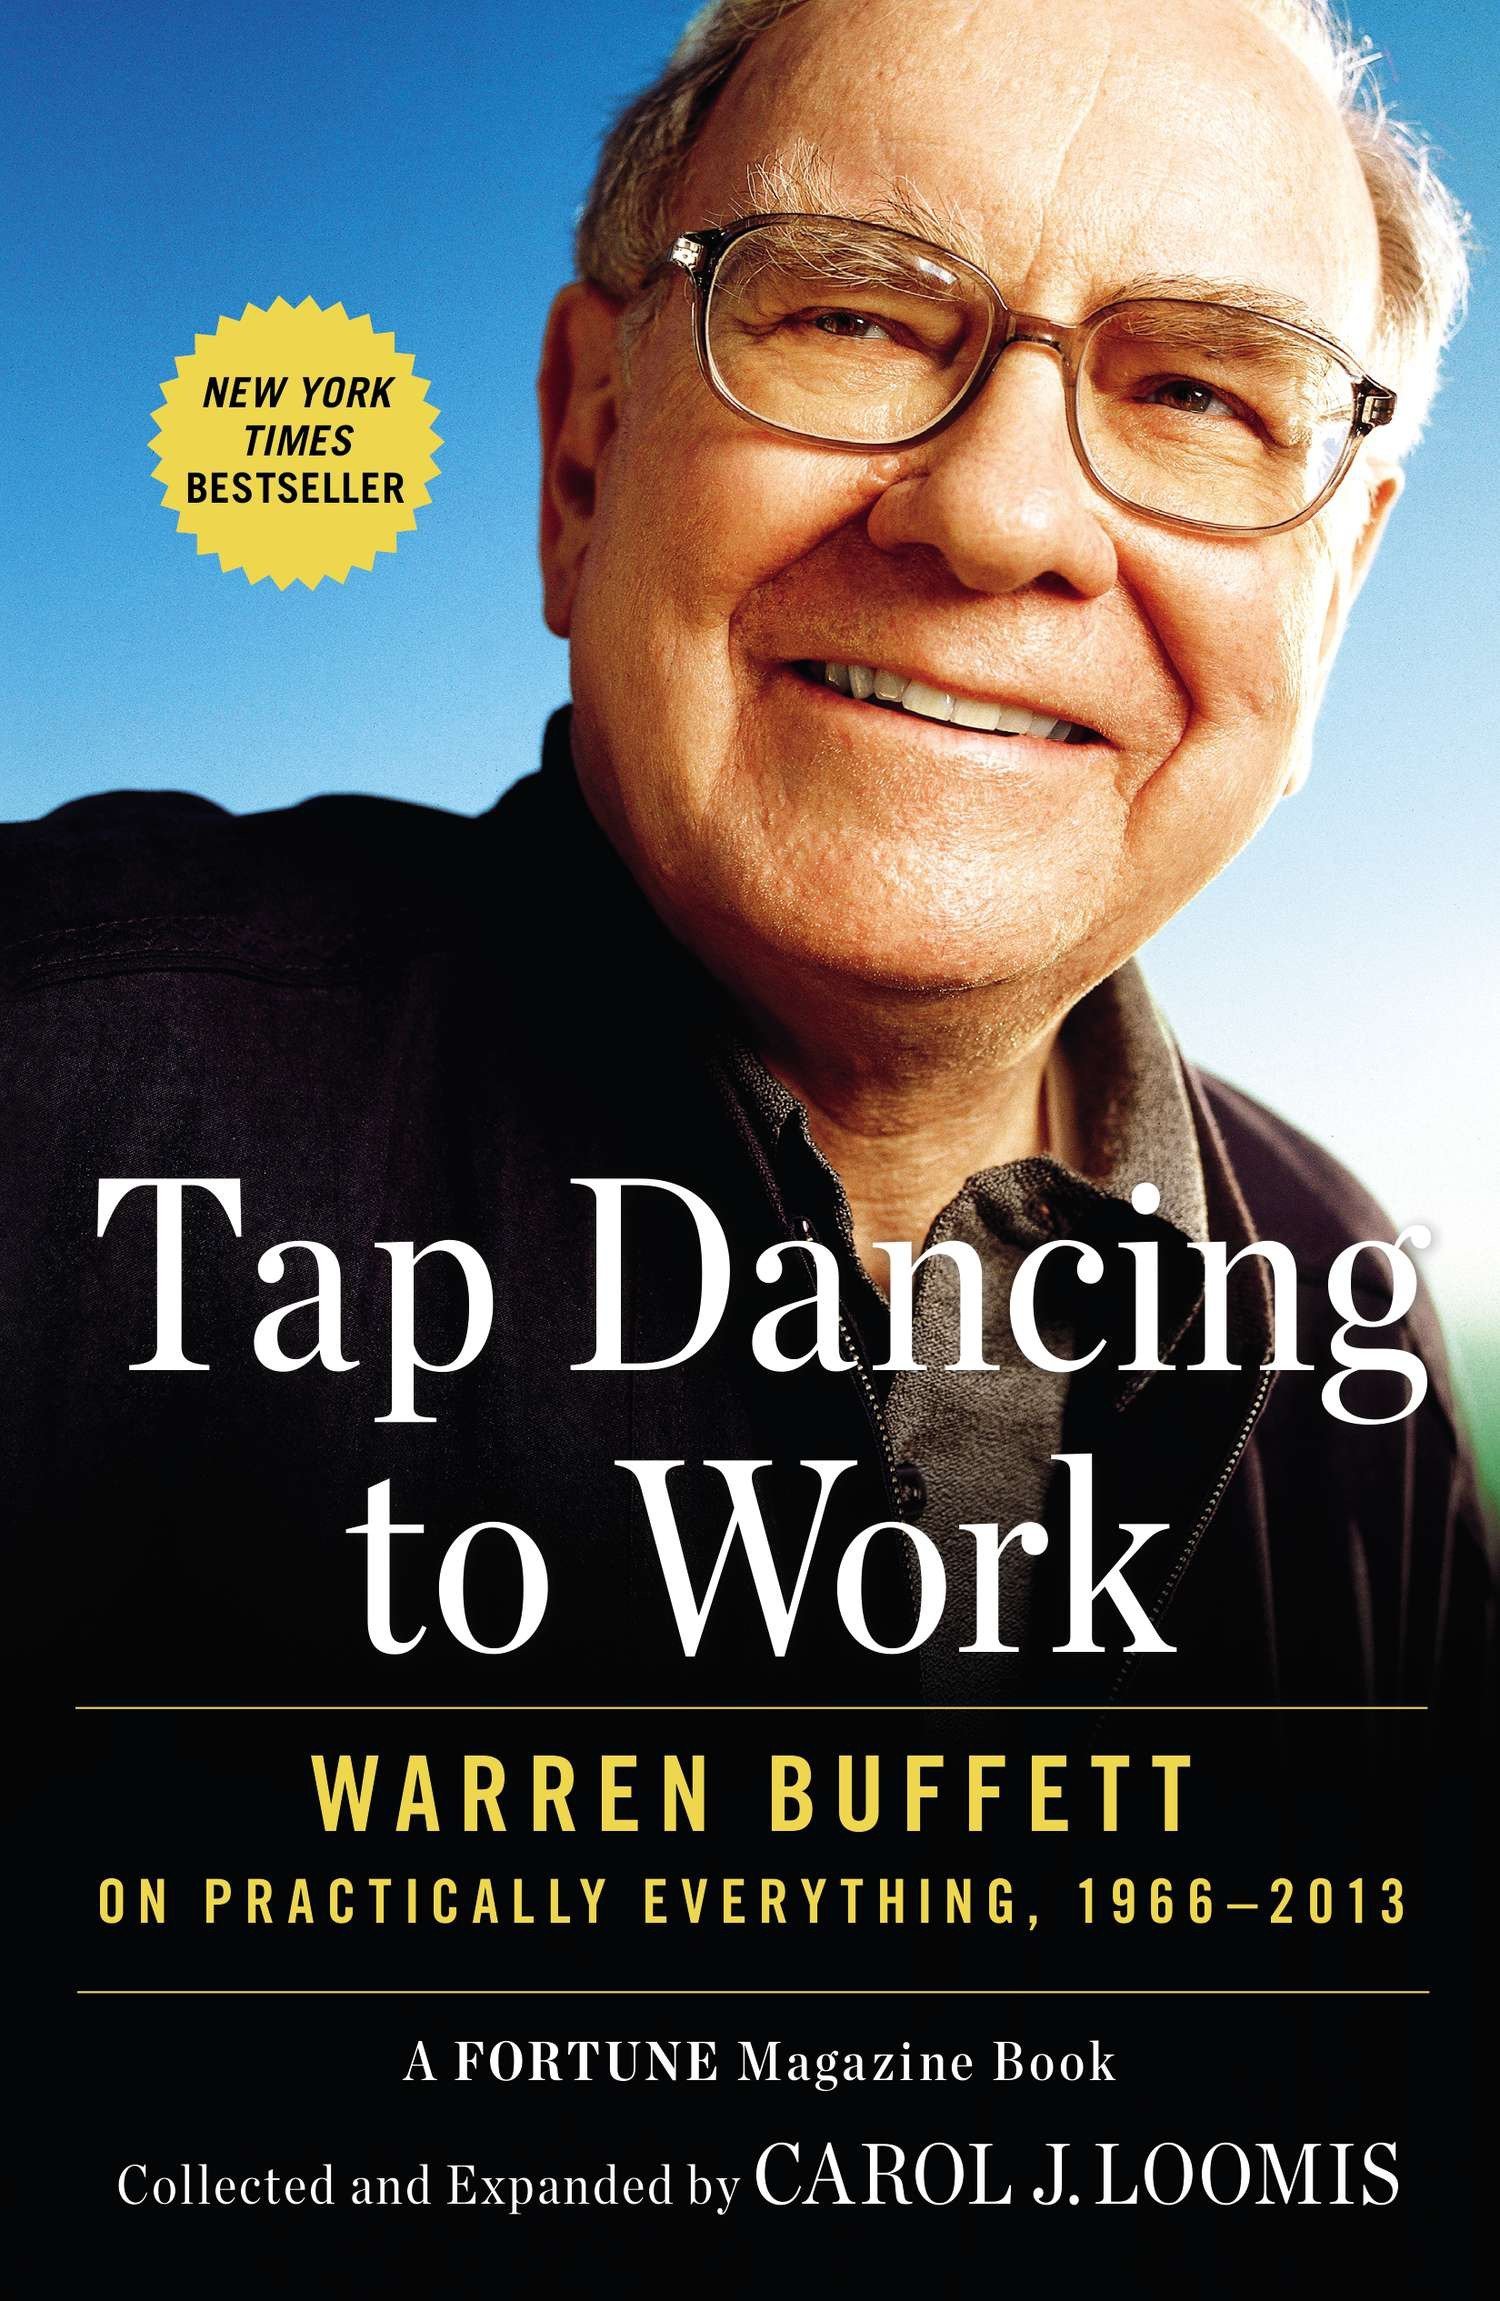 Tap Dancing to Work: Warren Buffett on Practically Everything...1966-2013